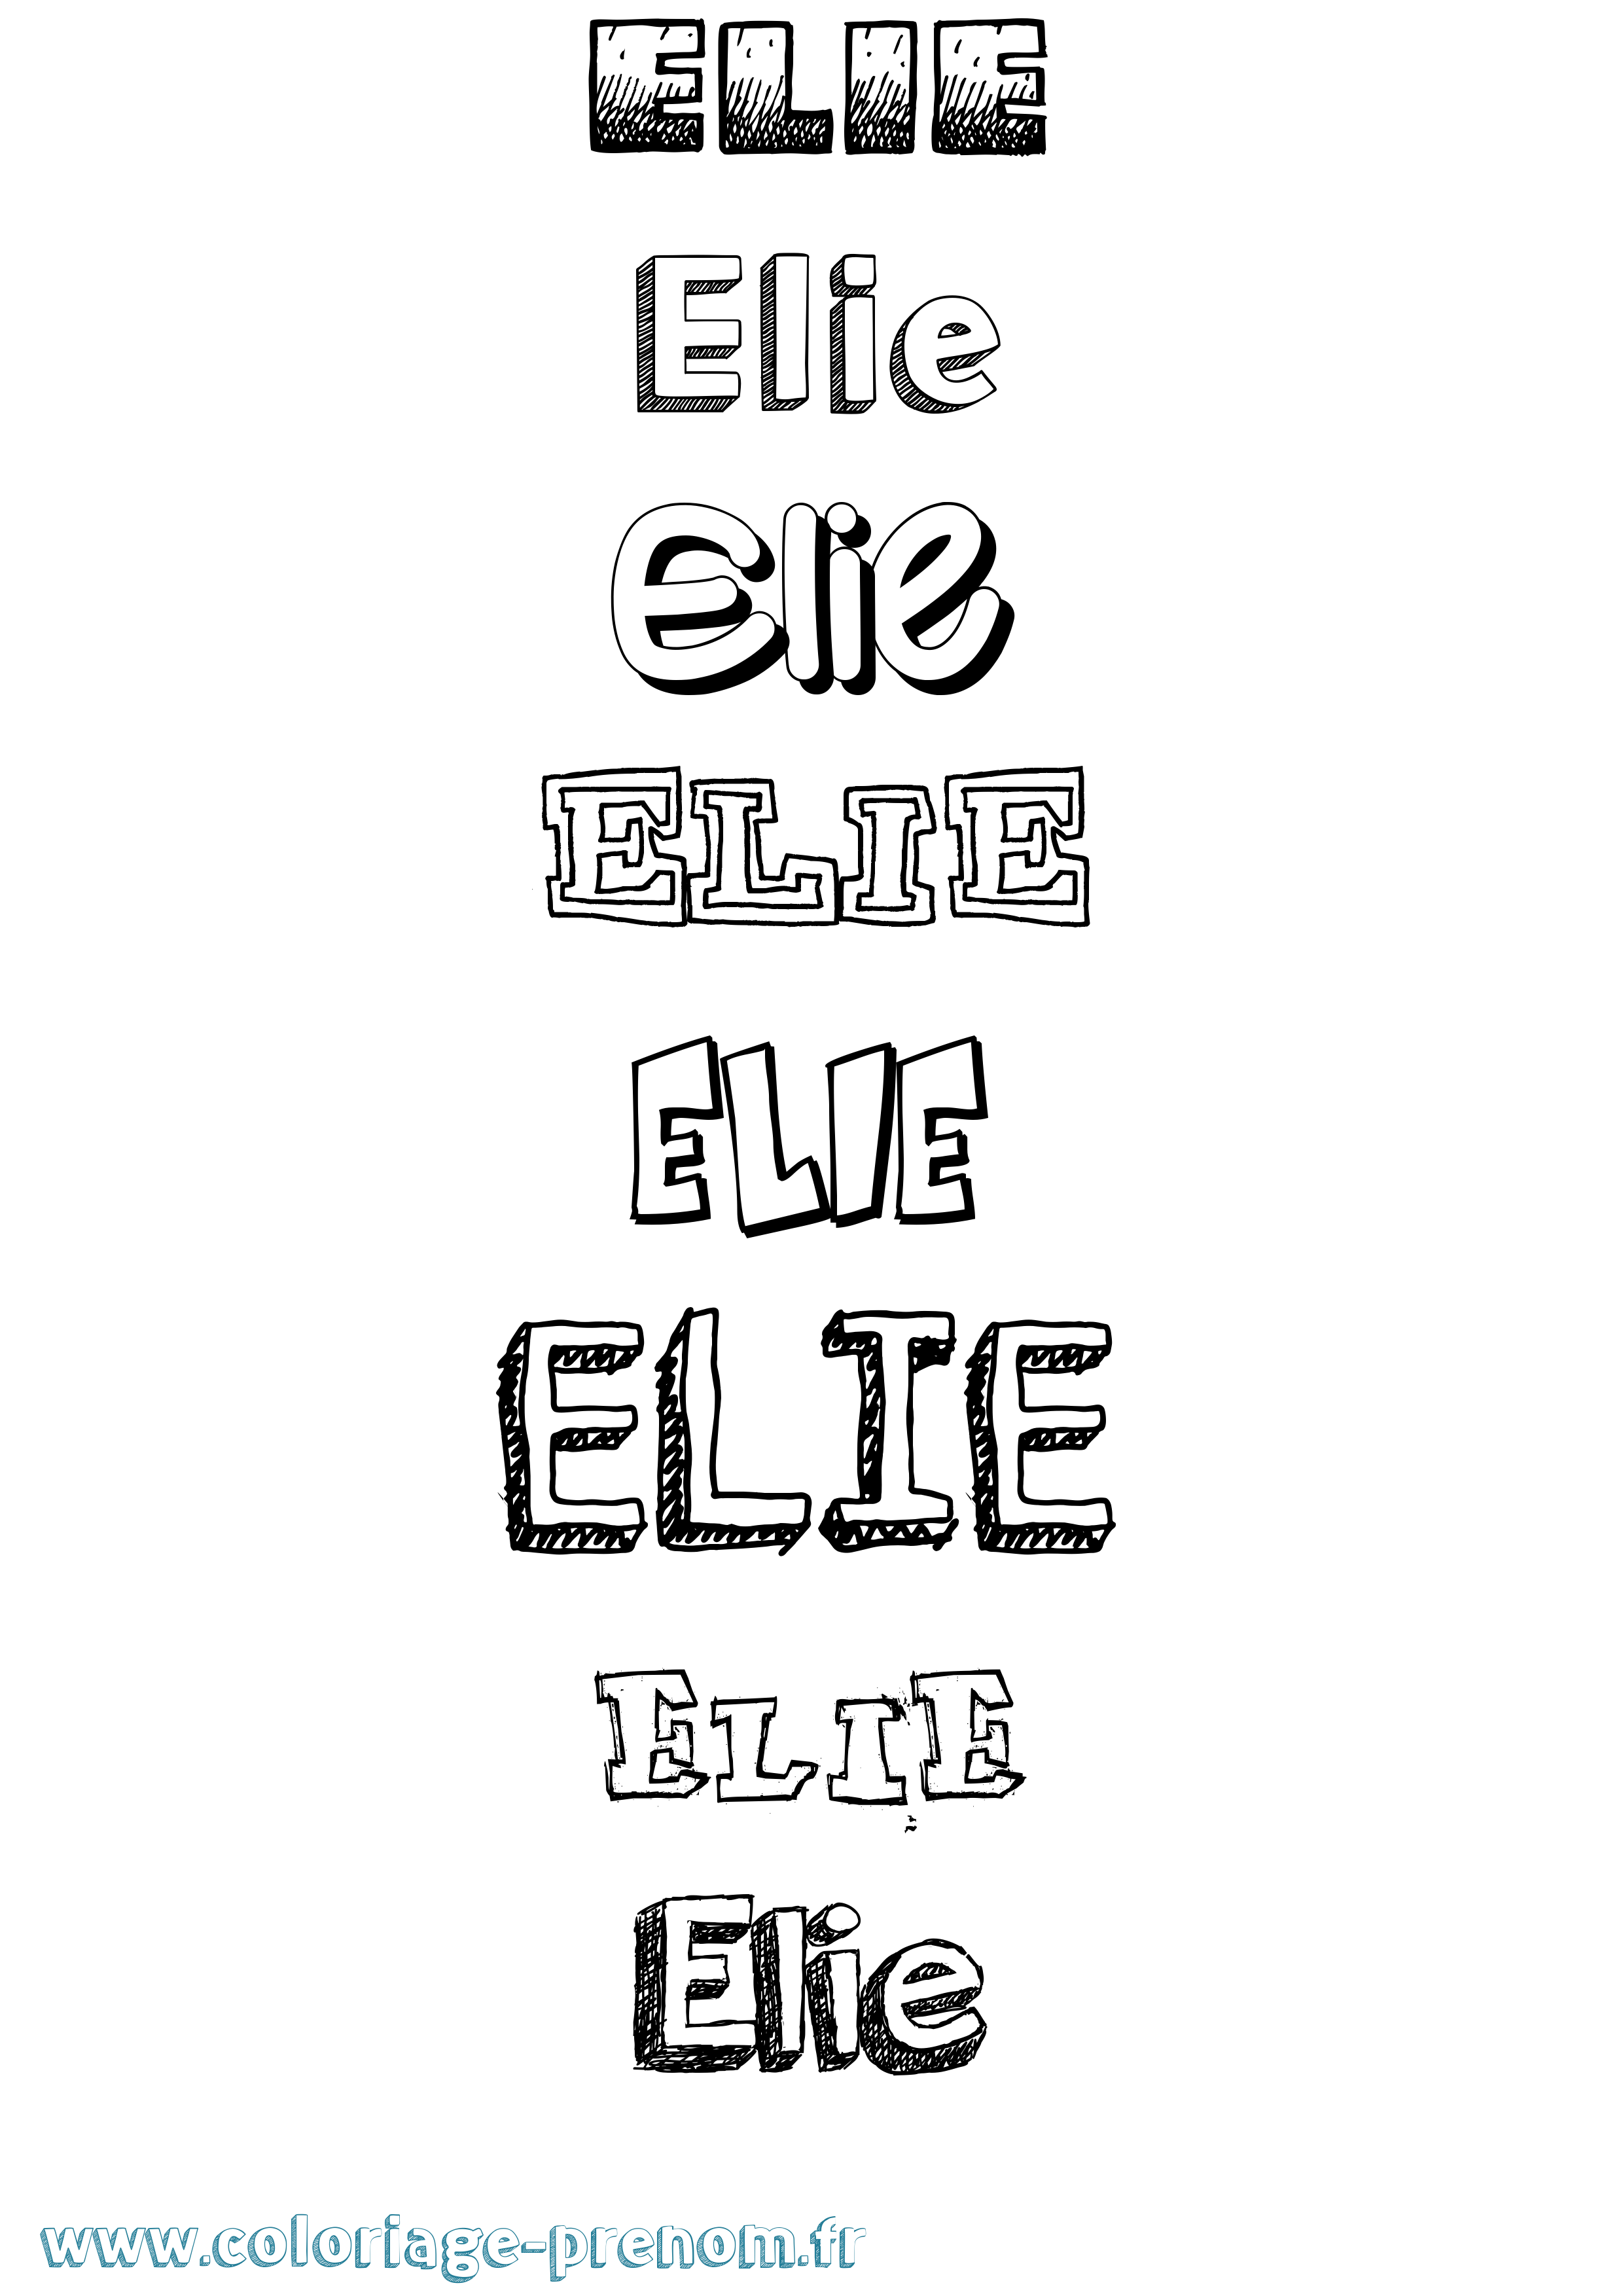 Coloriage prénom Elie